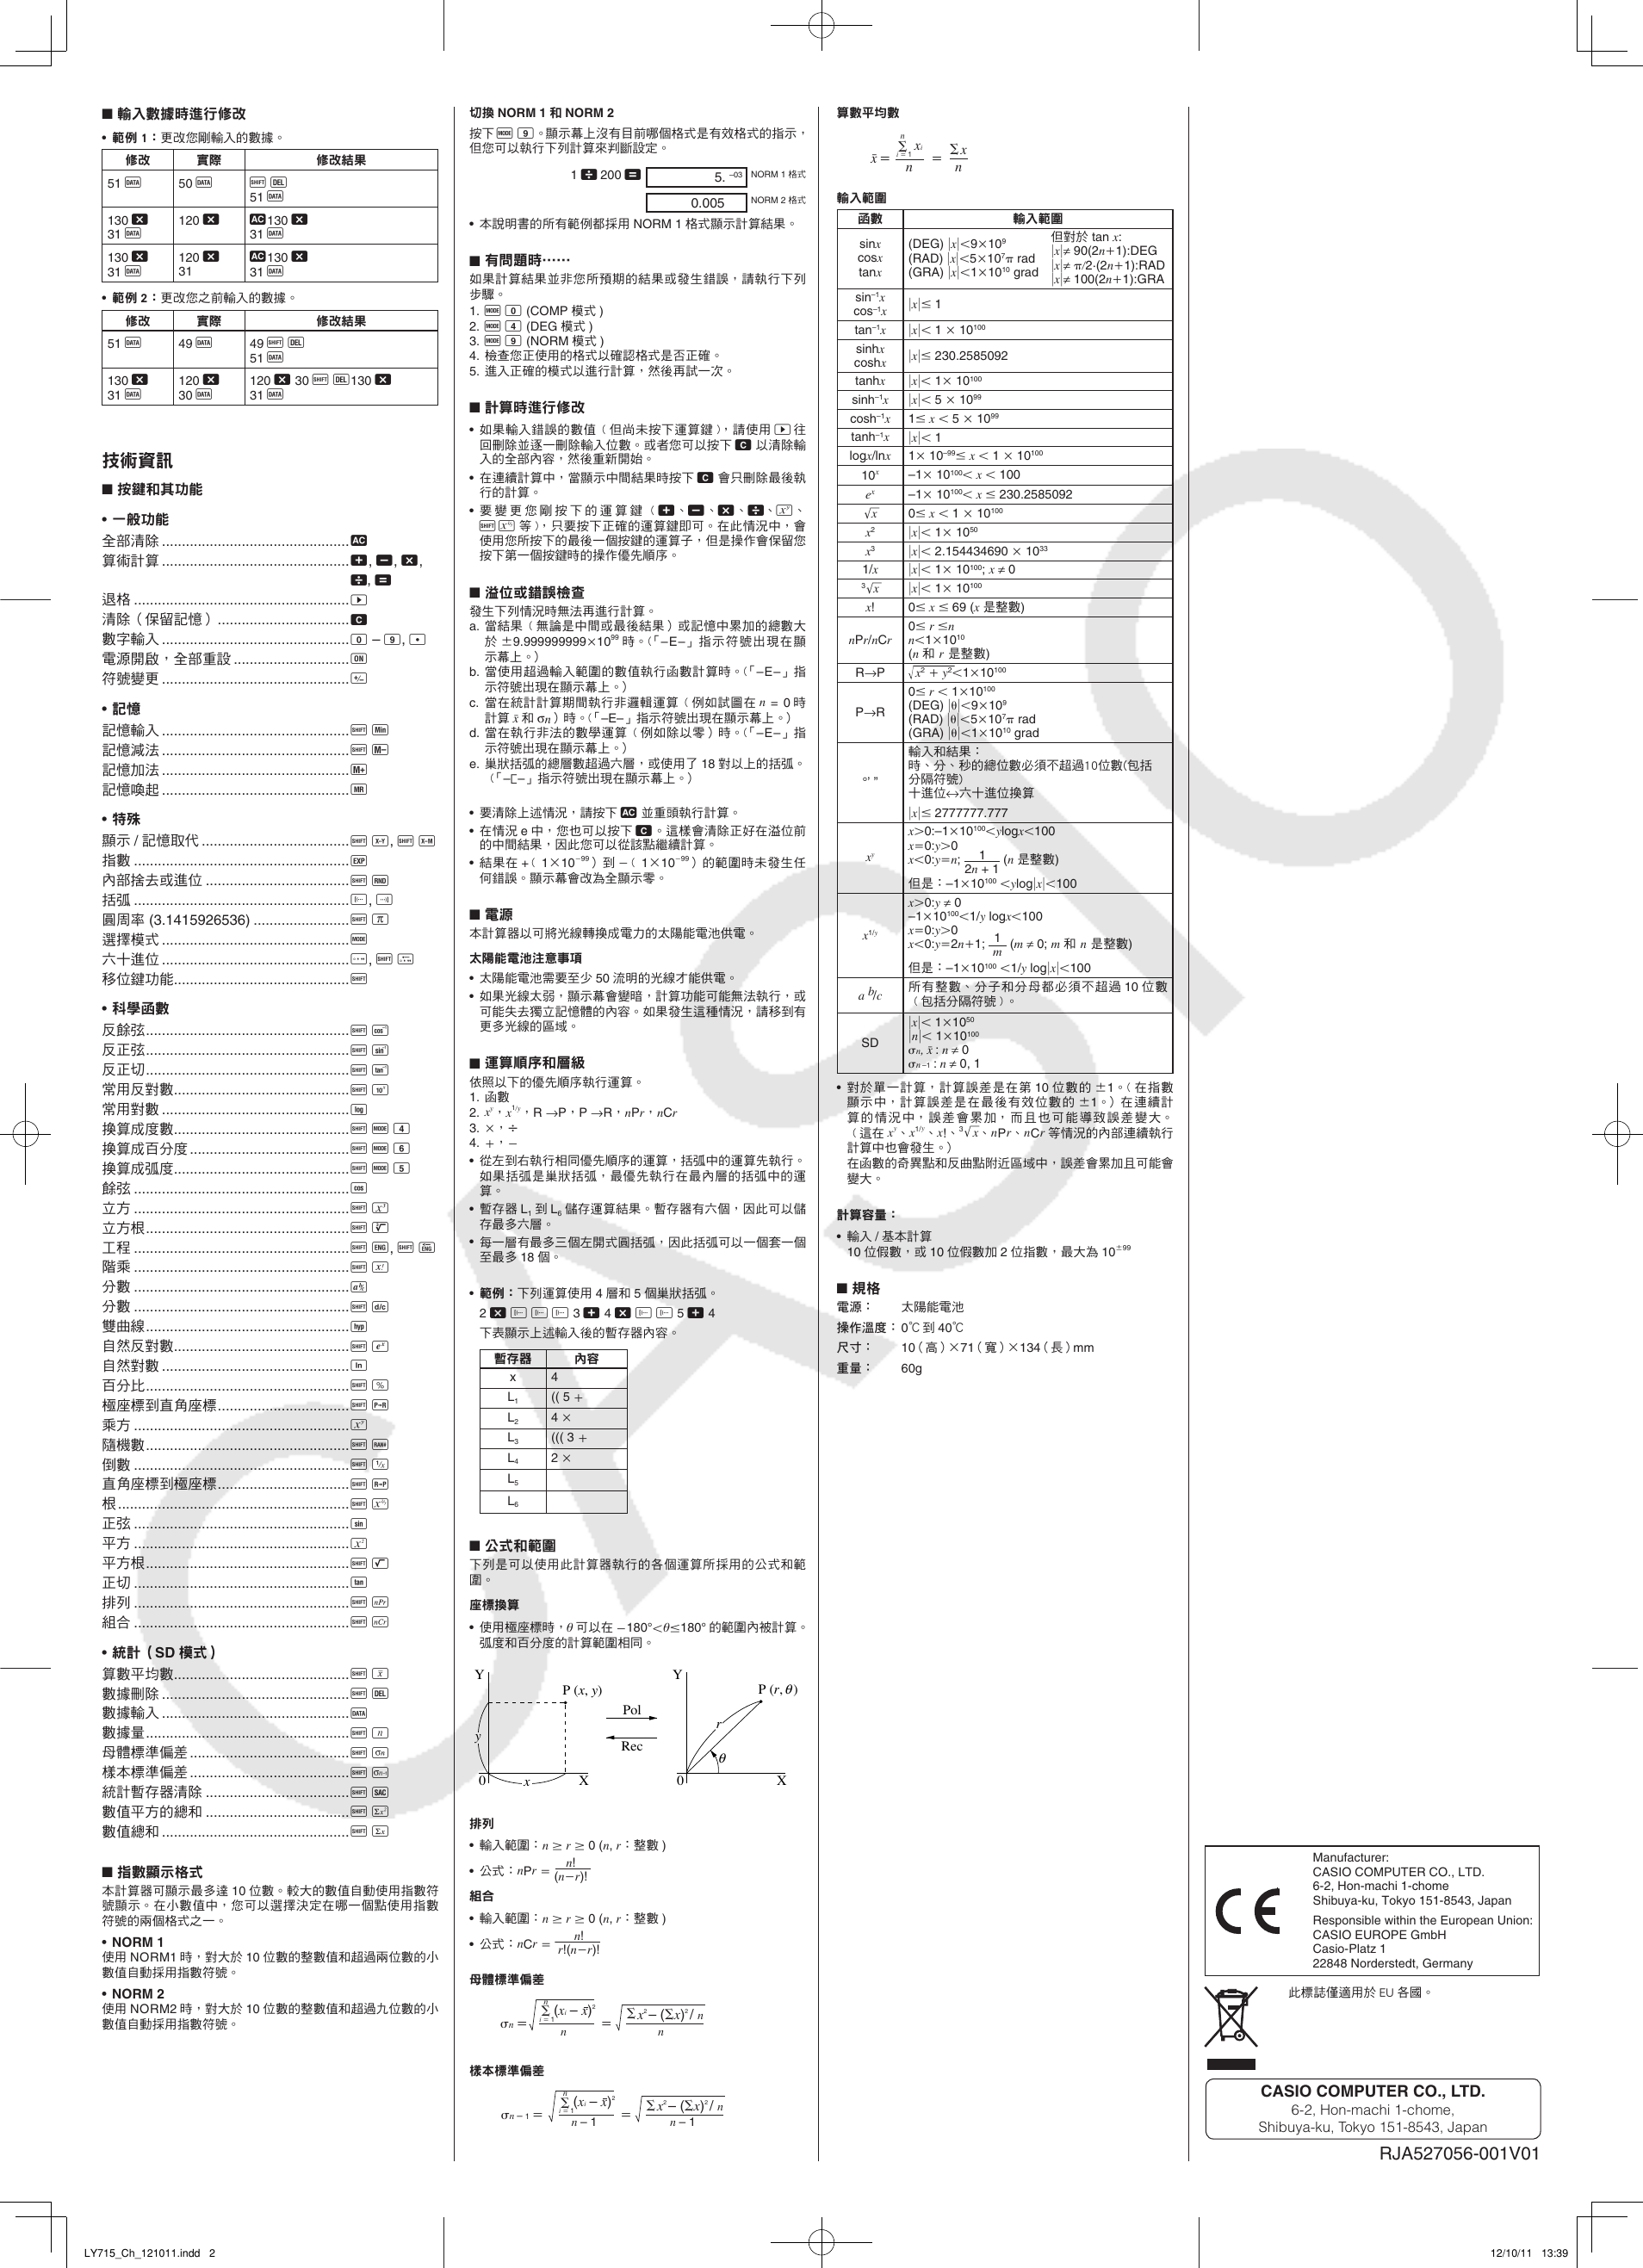 Page 2 of 2 - Casio Fx-82SOLAR Fx82SOLAR TW